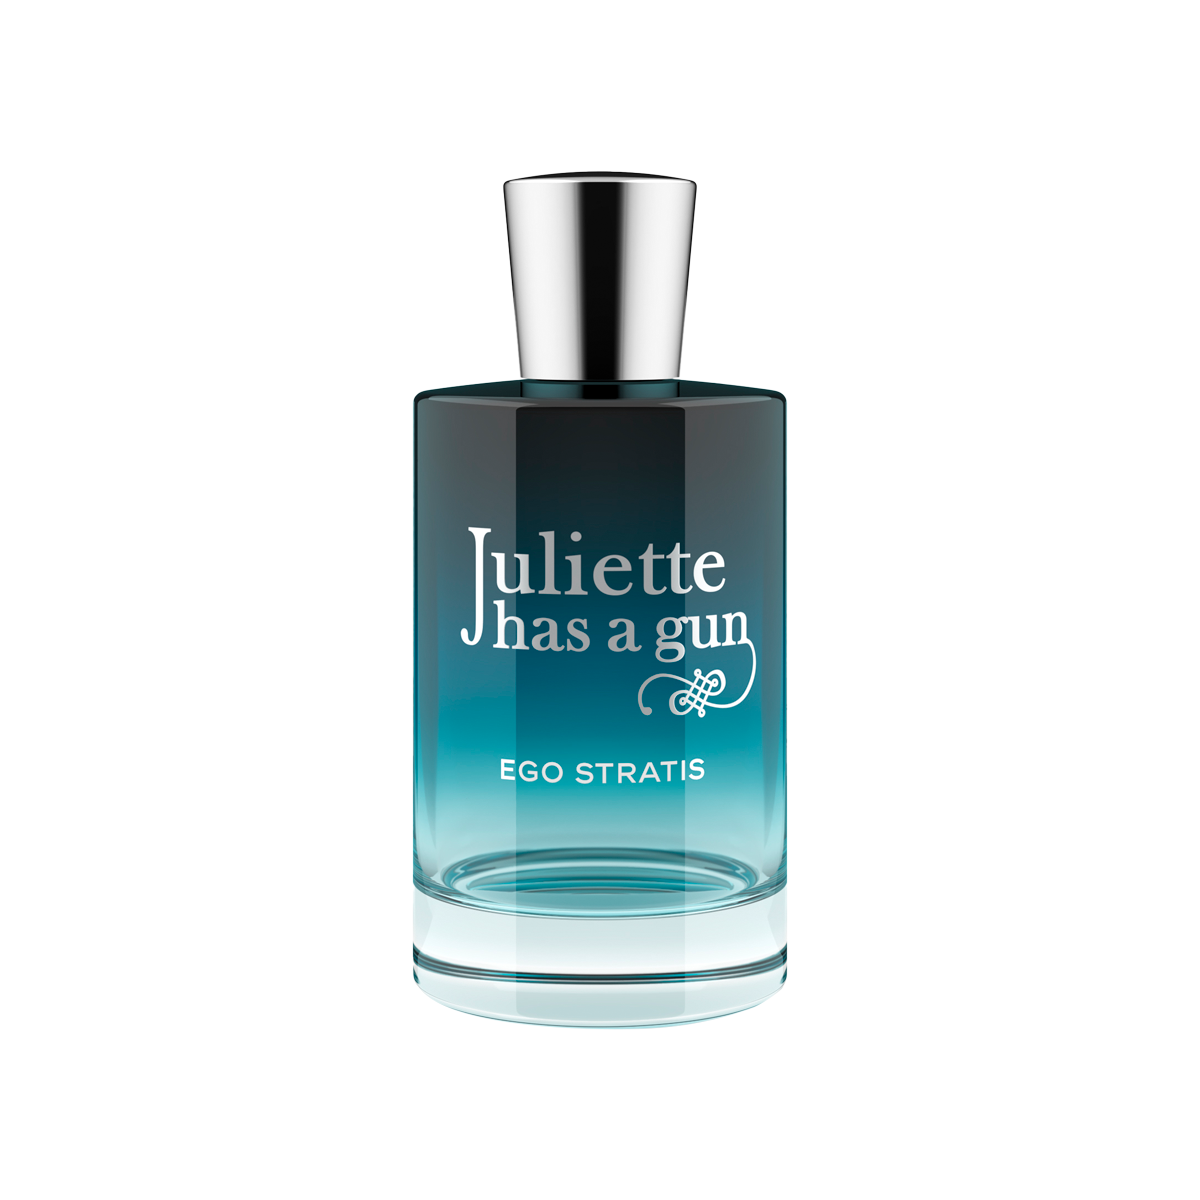 Juliette has a Gun - Ego Stratis Eau de Parfum